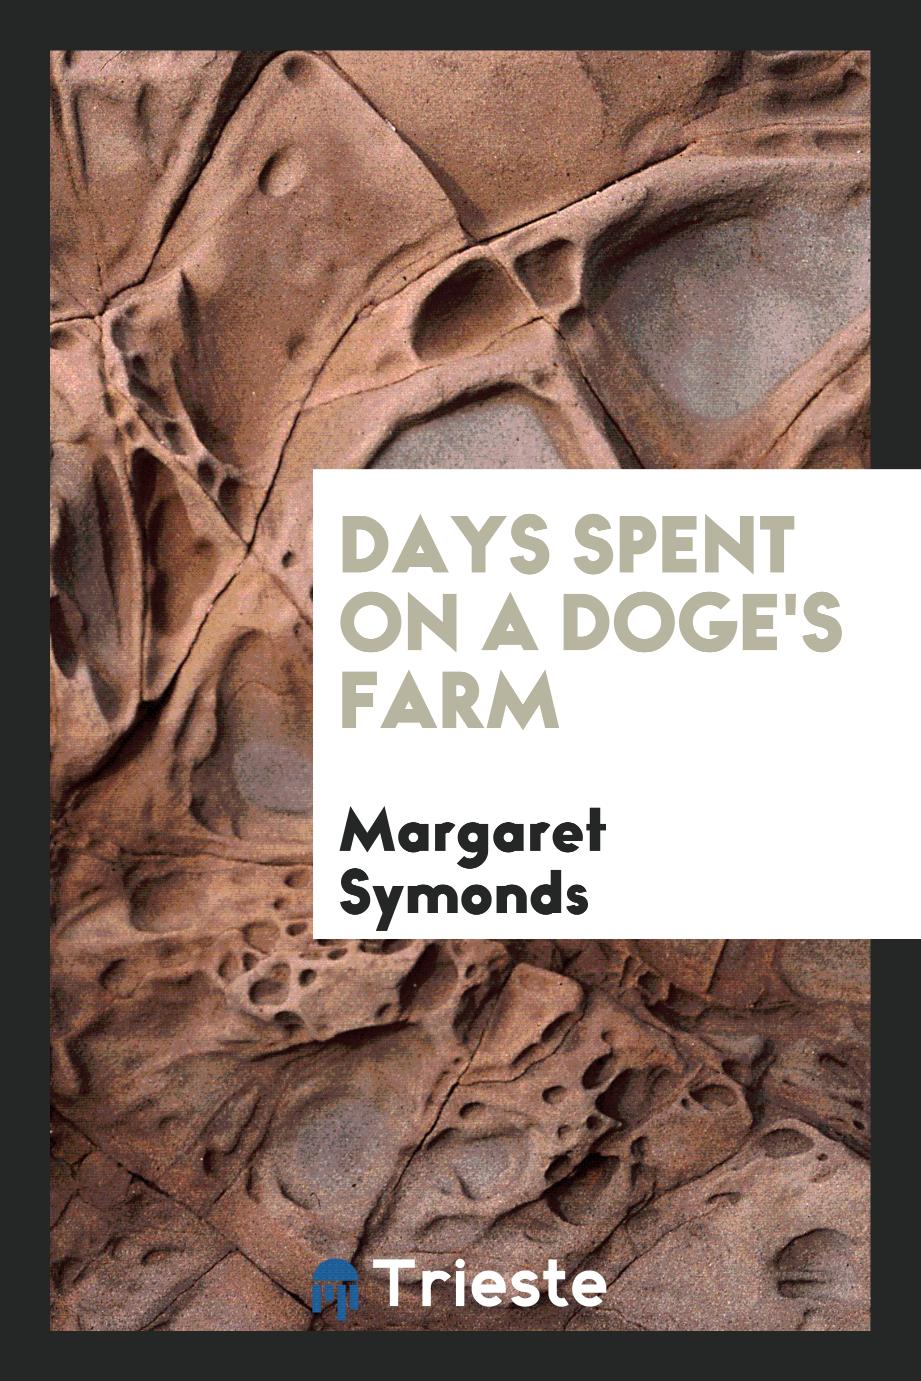 Days spent on a doge's farm